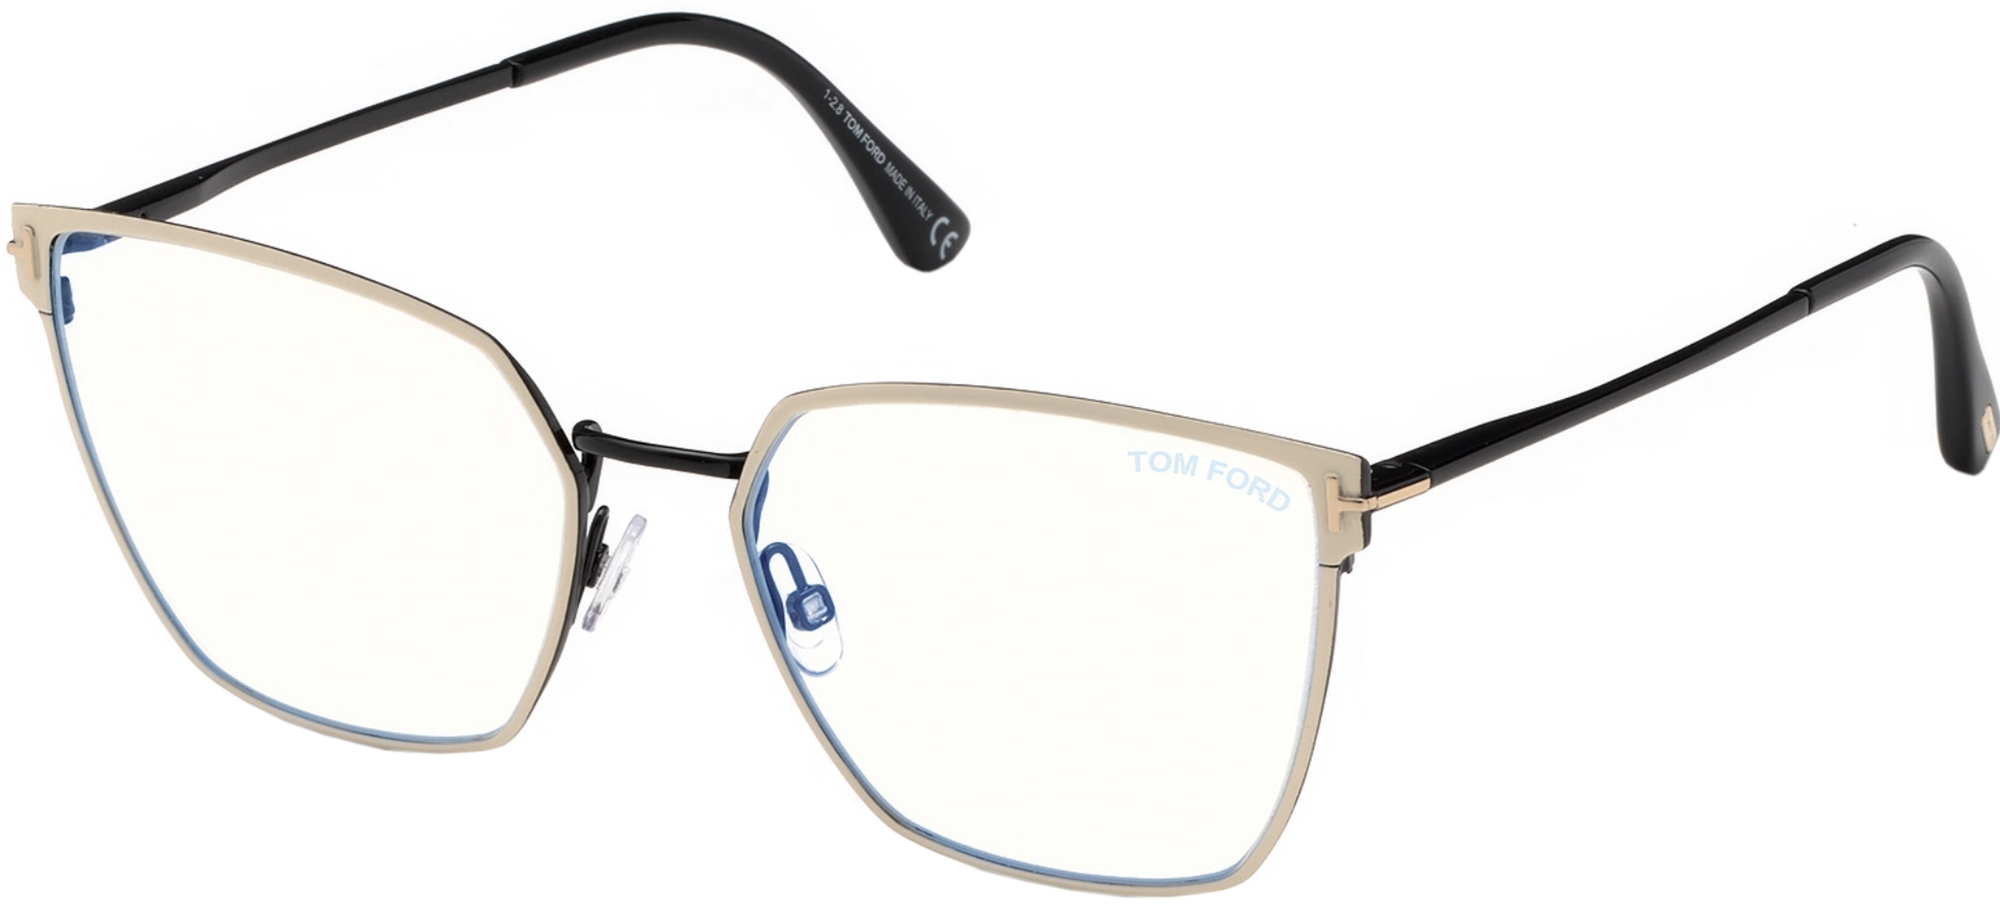 Tom Ford Ft 5574-B Blue Block 021 A Glasses